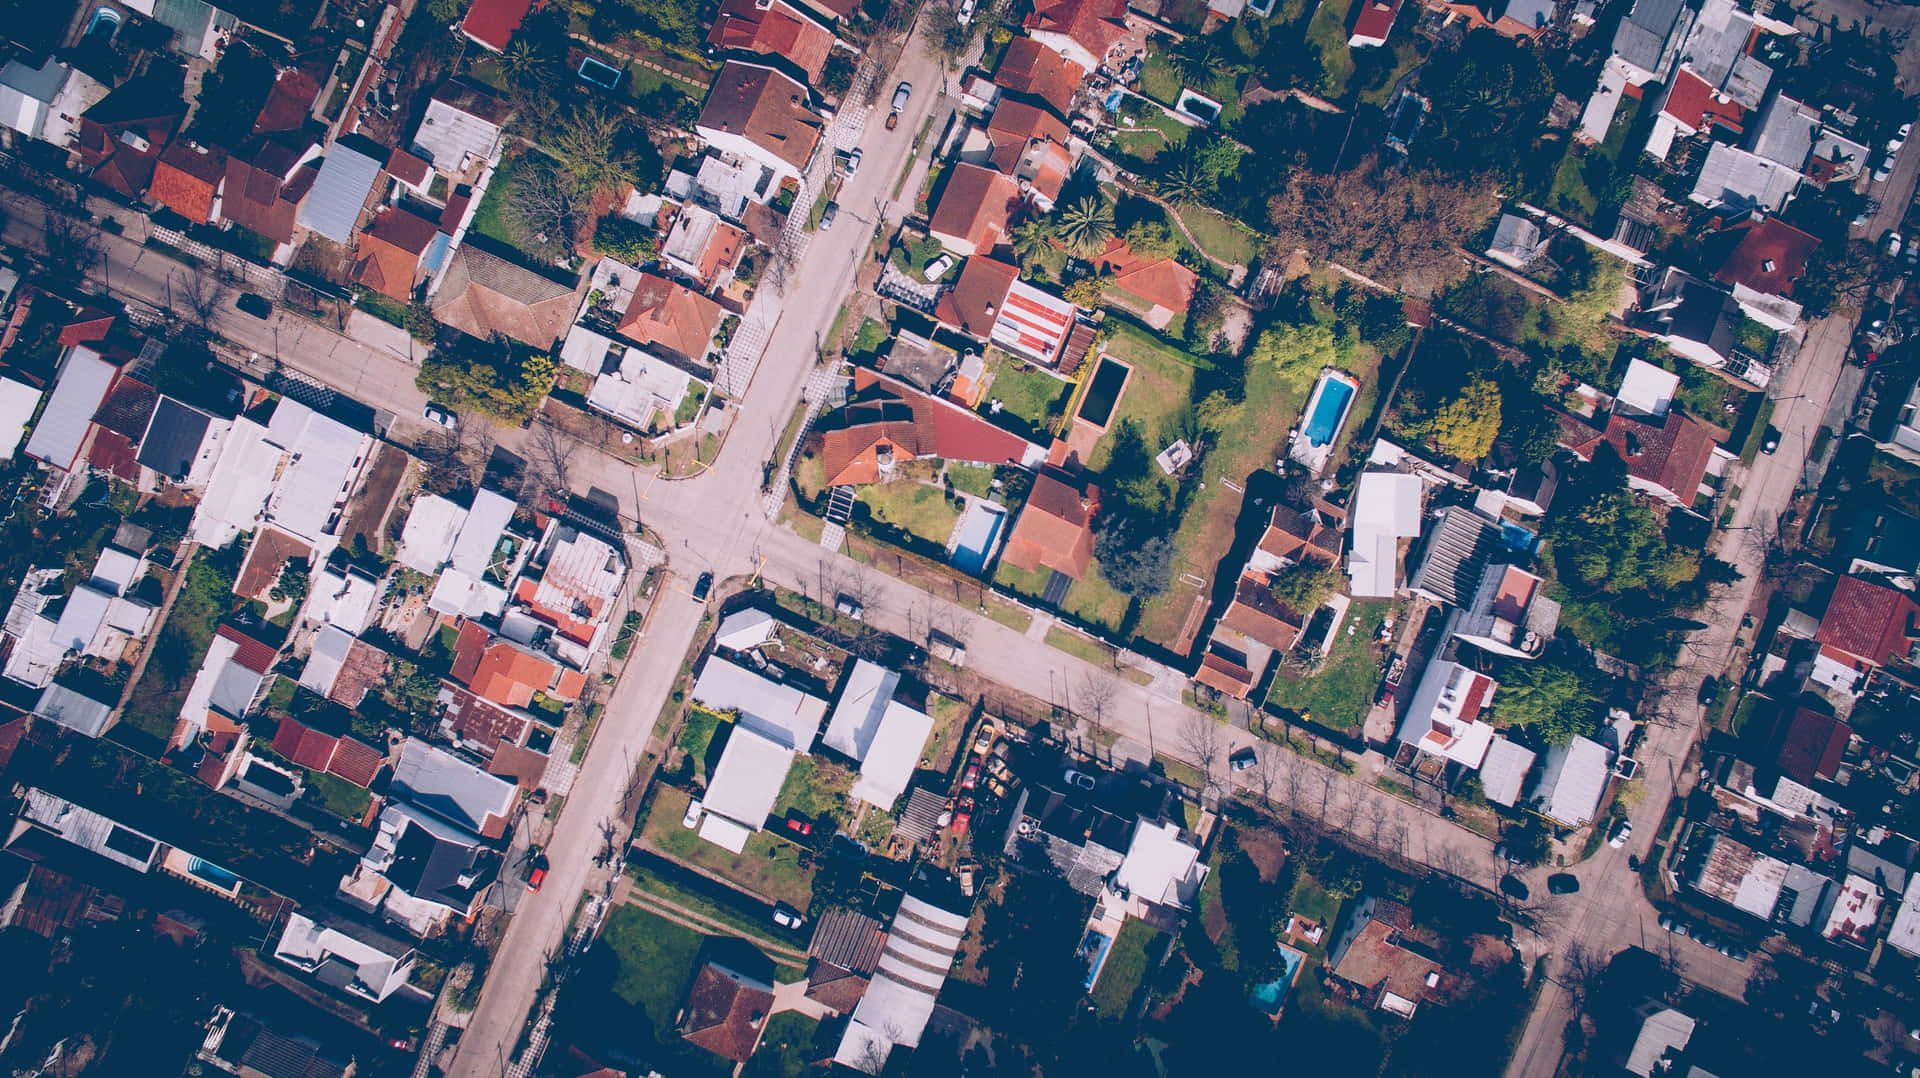 Aerial View Of A Residential Neighborhood